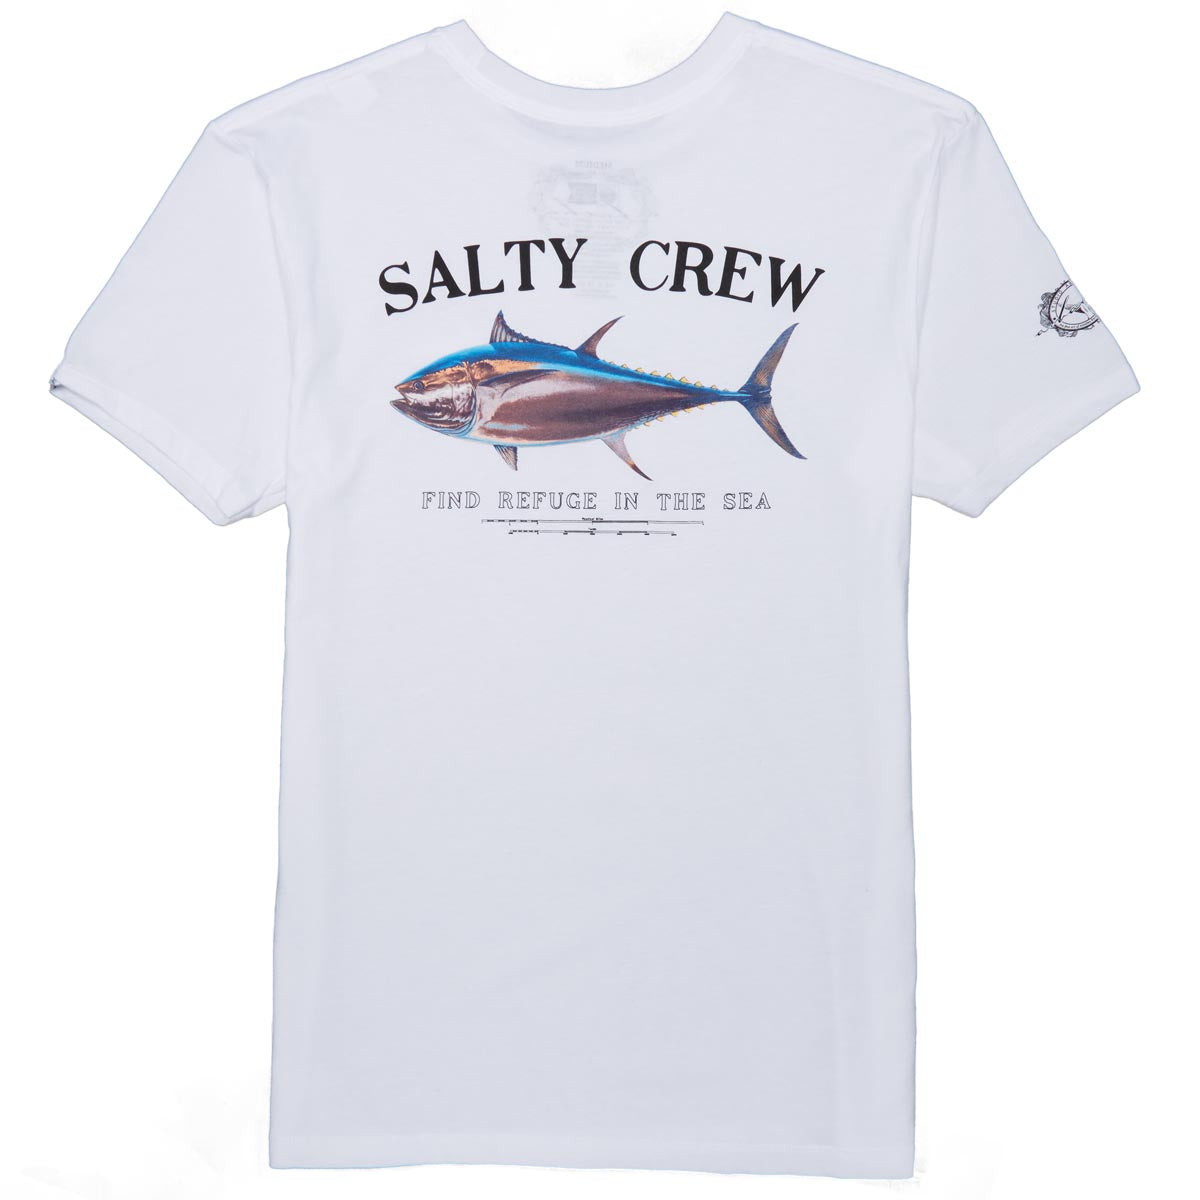 Salty Crew Big Blue T-Shirt - White image 1